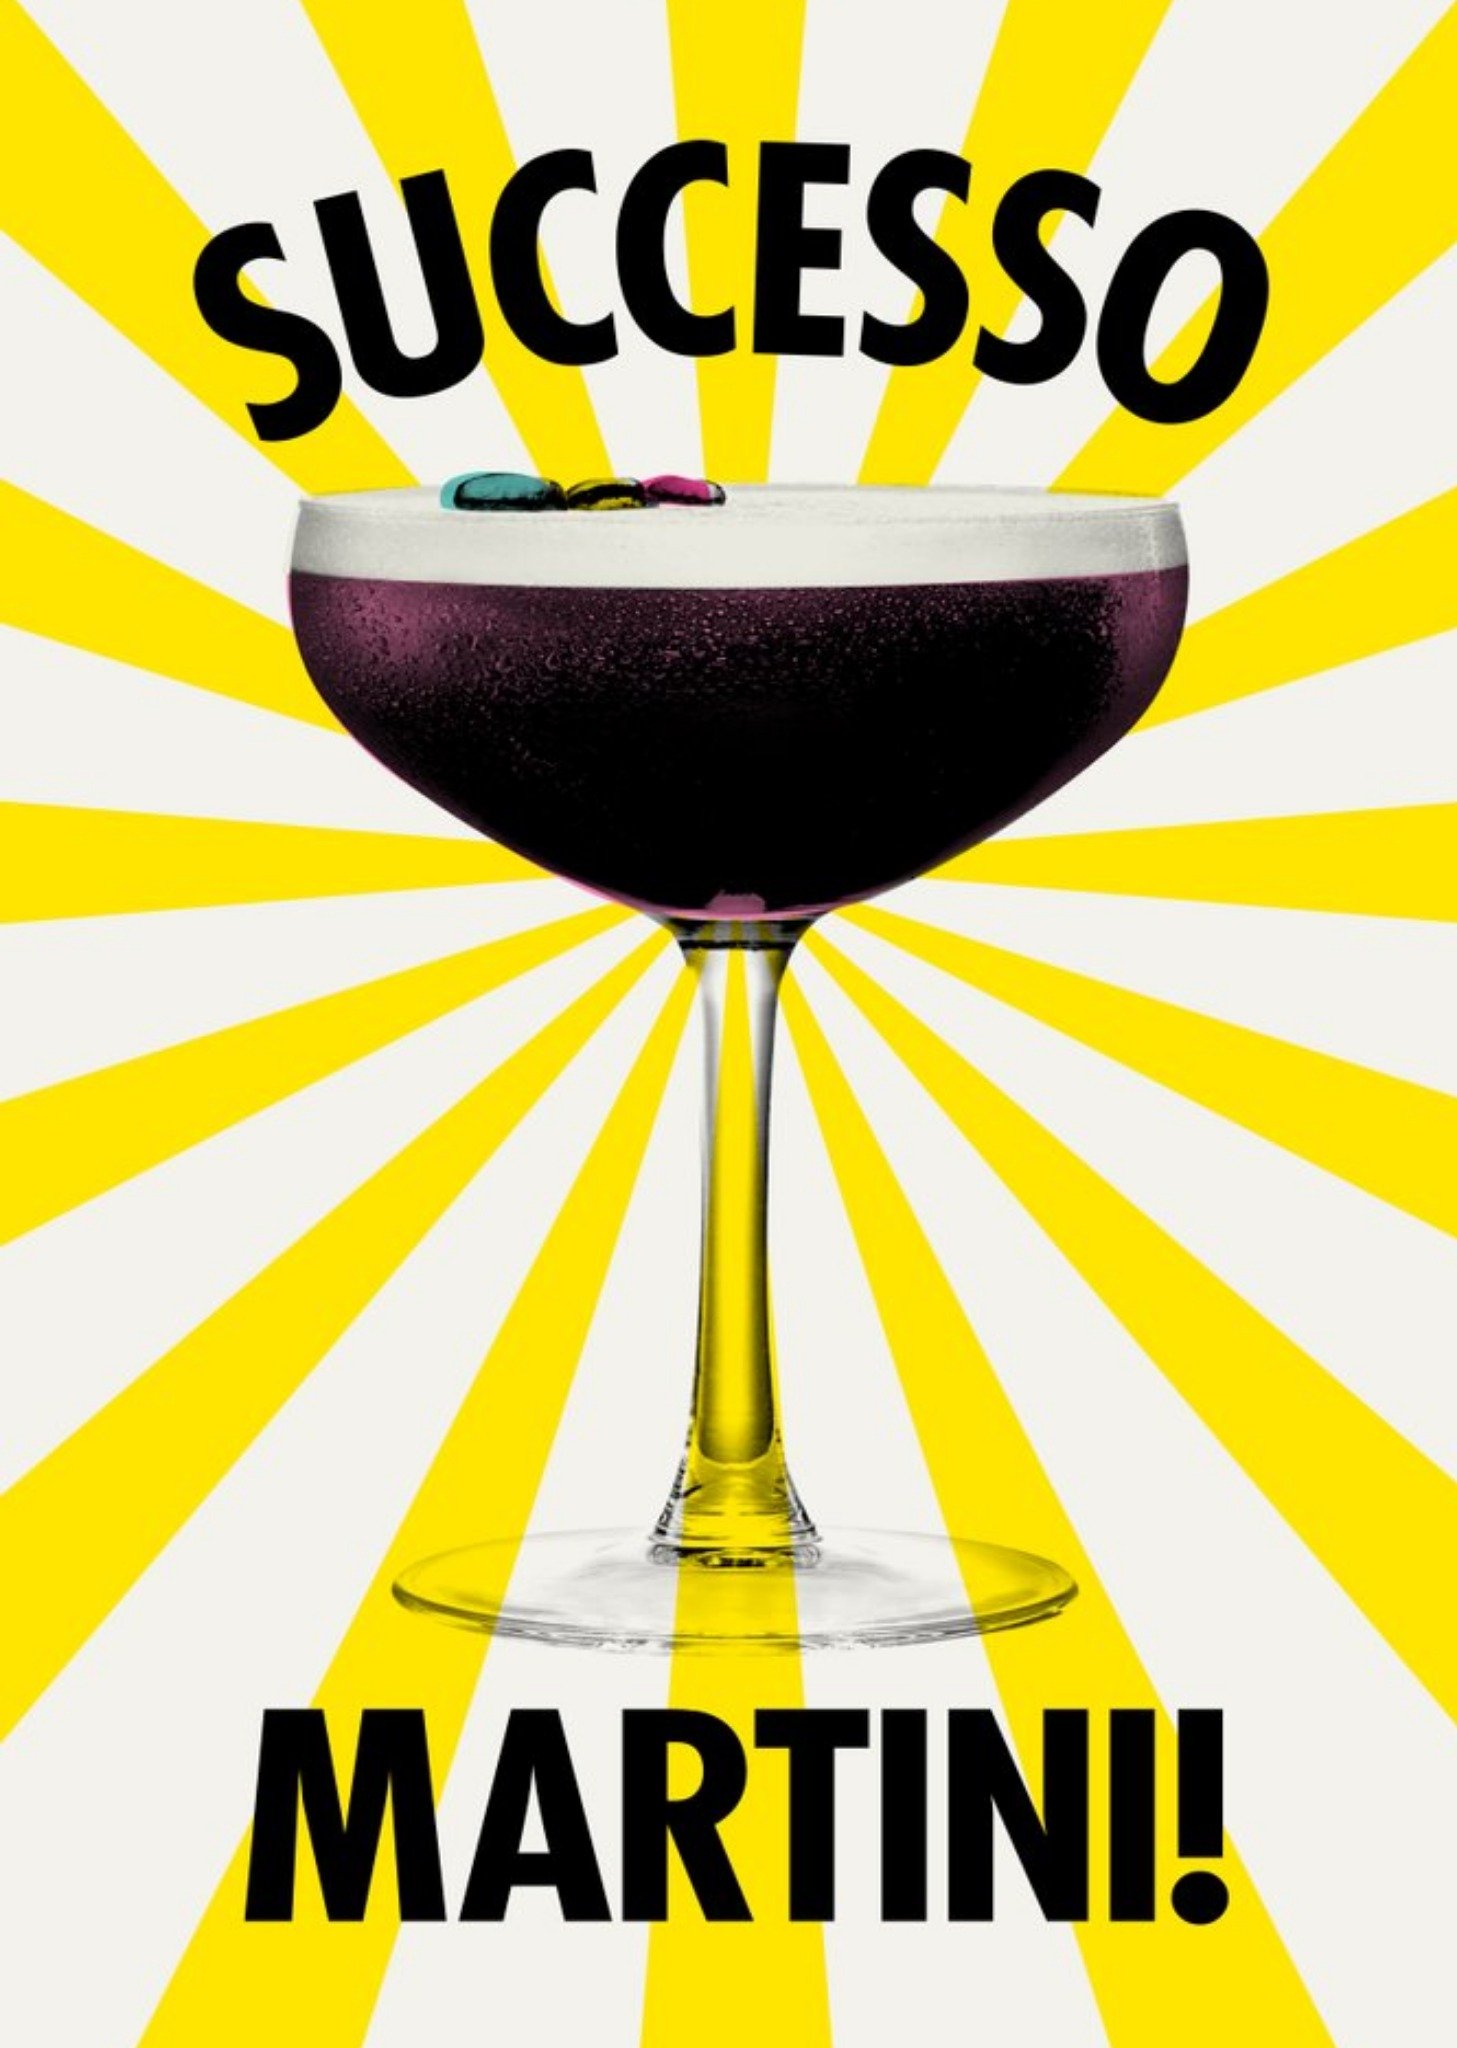 Moonpig Modern Congratulations Successo Martini Card, Large